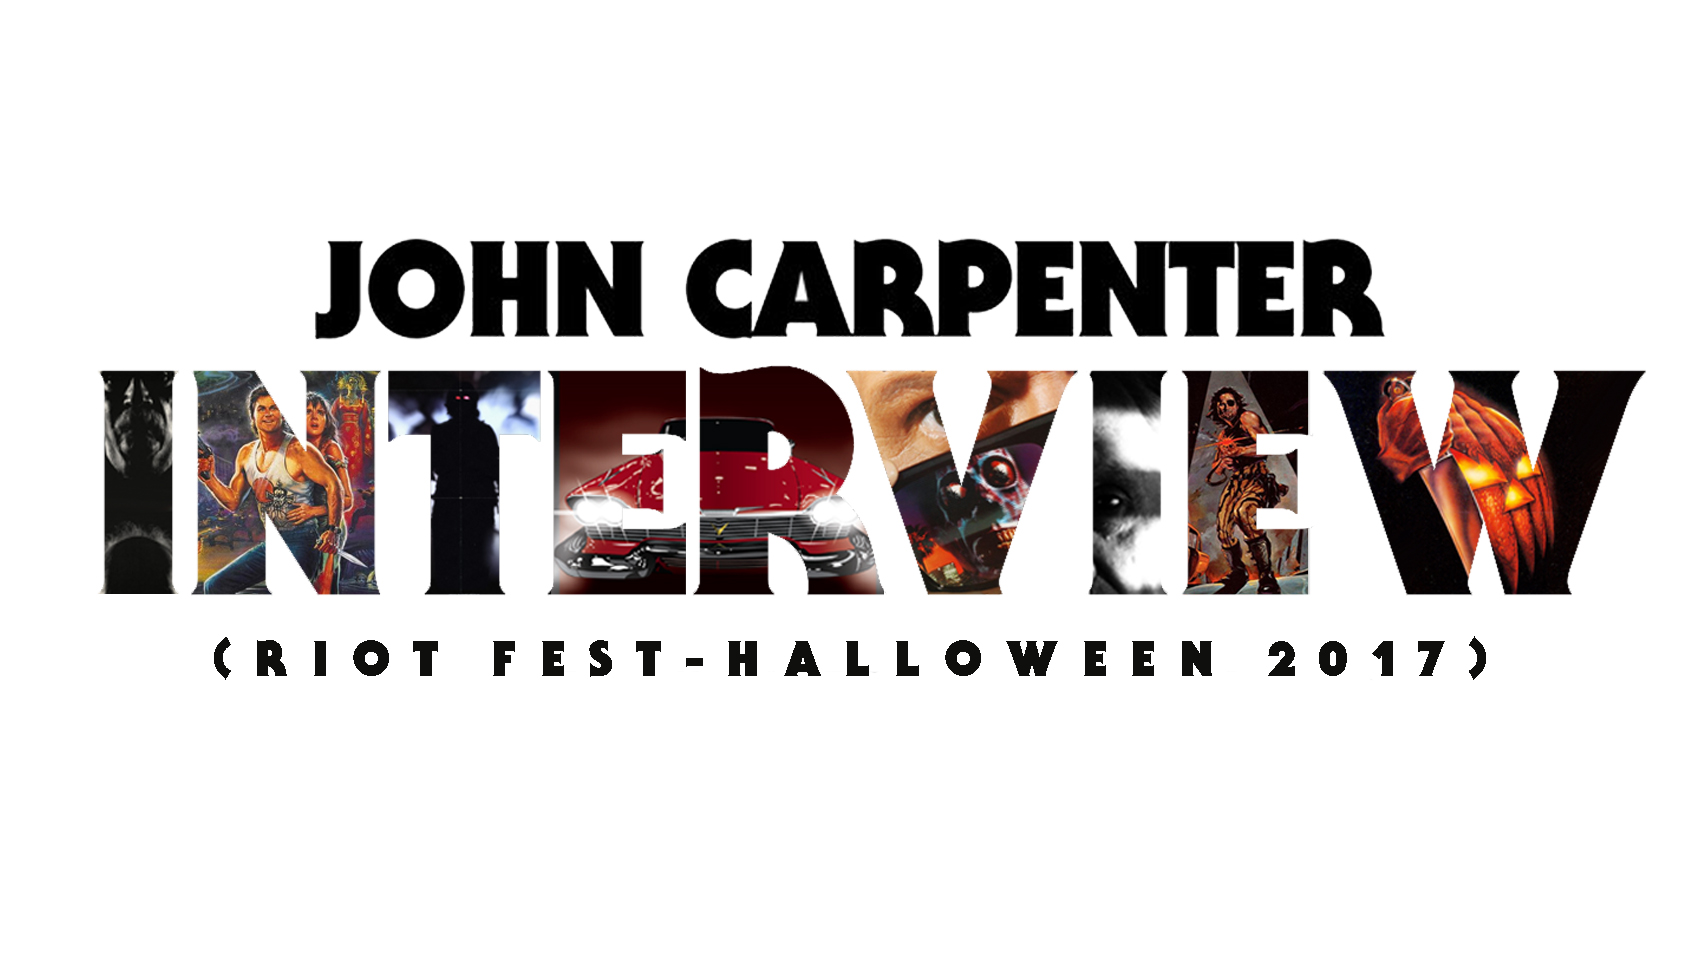 John Carpenter - “Halloween” Original Score : r/vinyl